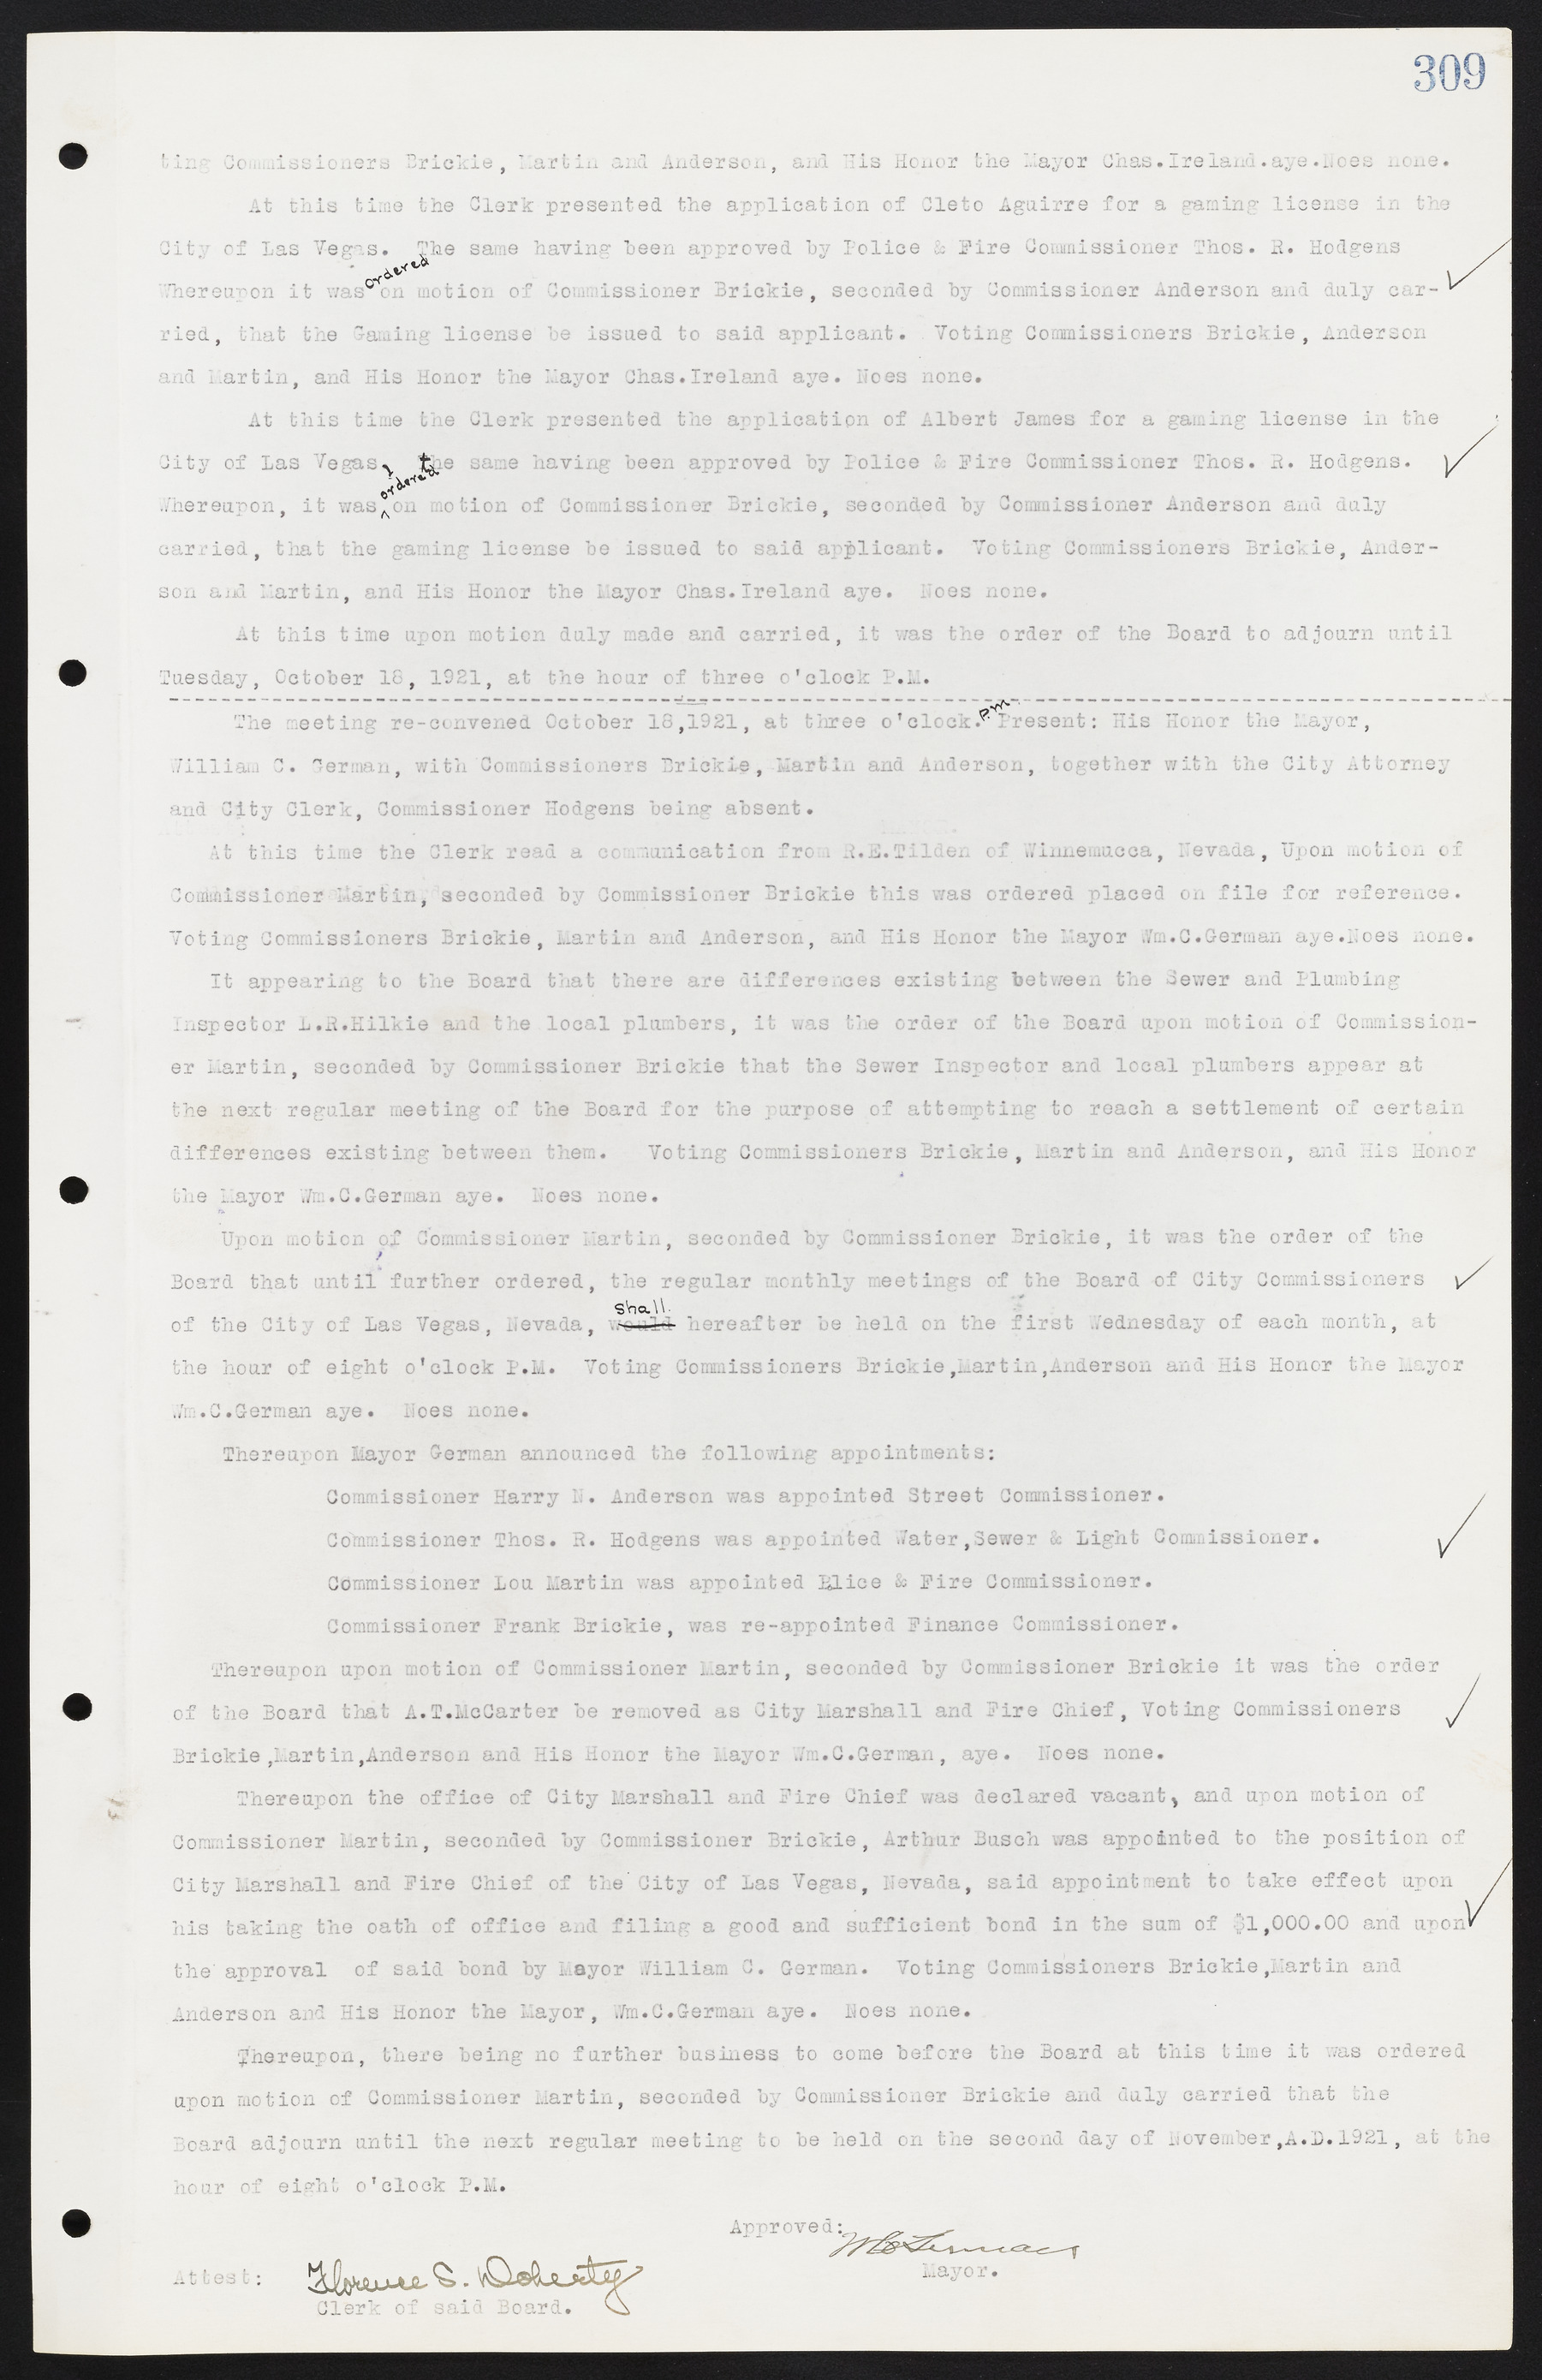 Las Vegas City Commission Minutes, June 22, 1911 to February 7, 1922, lvc000001-325